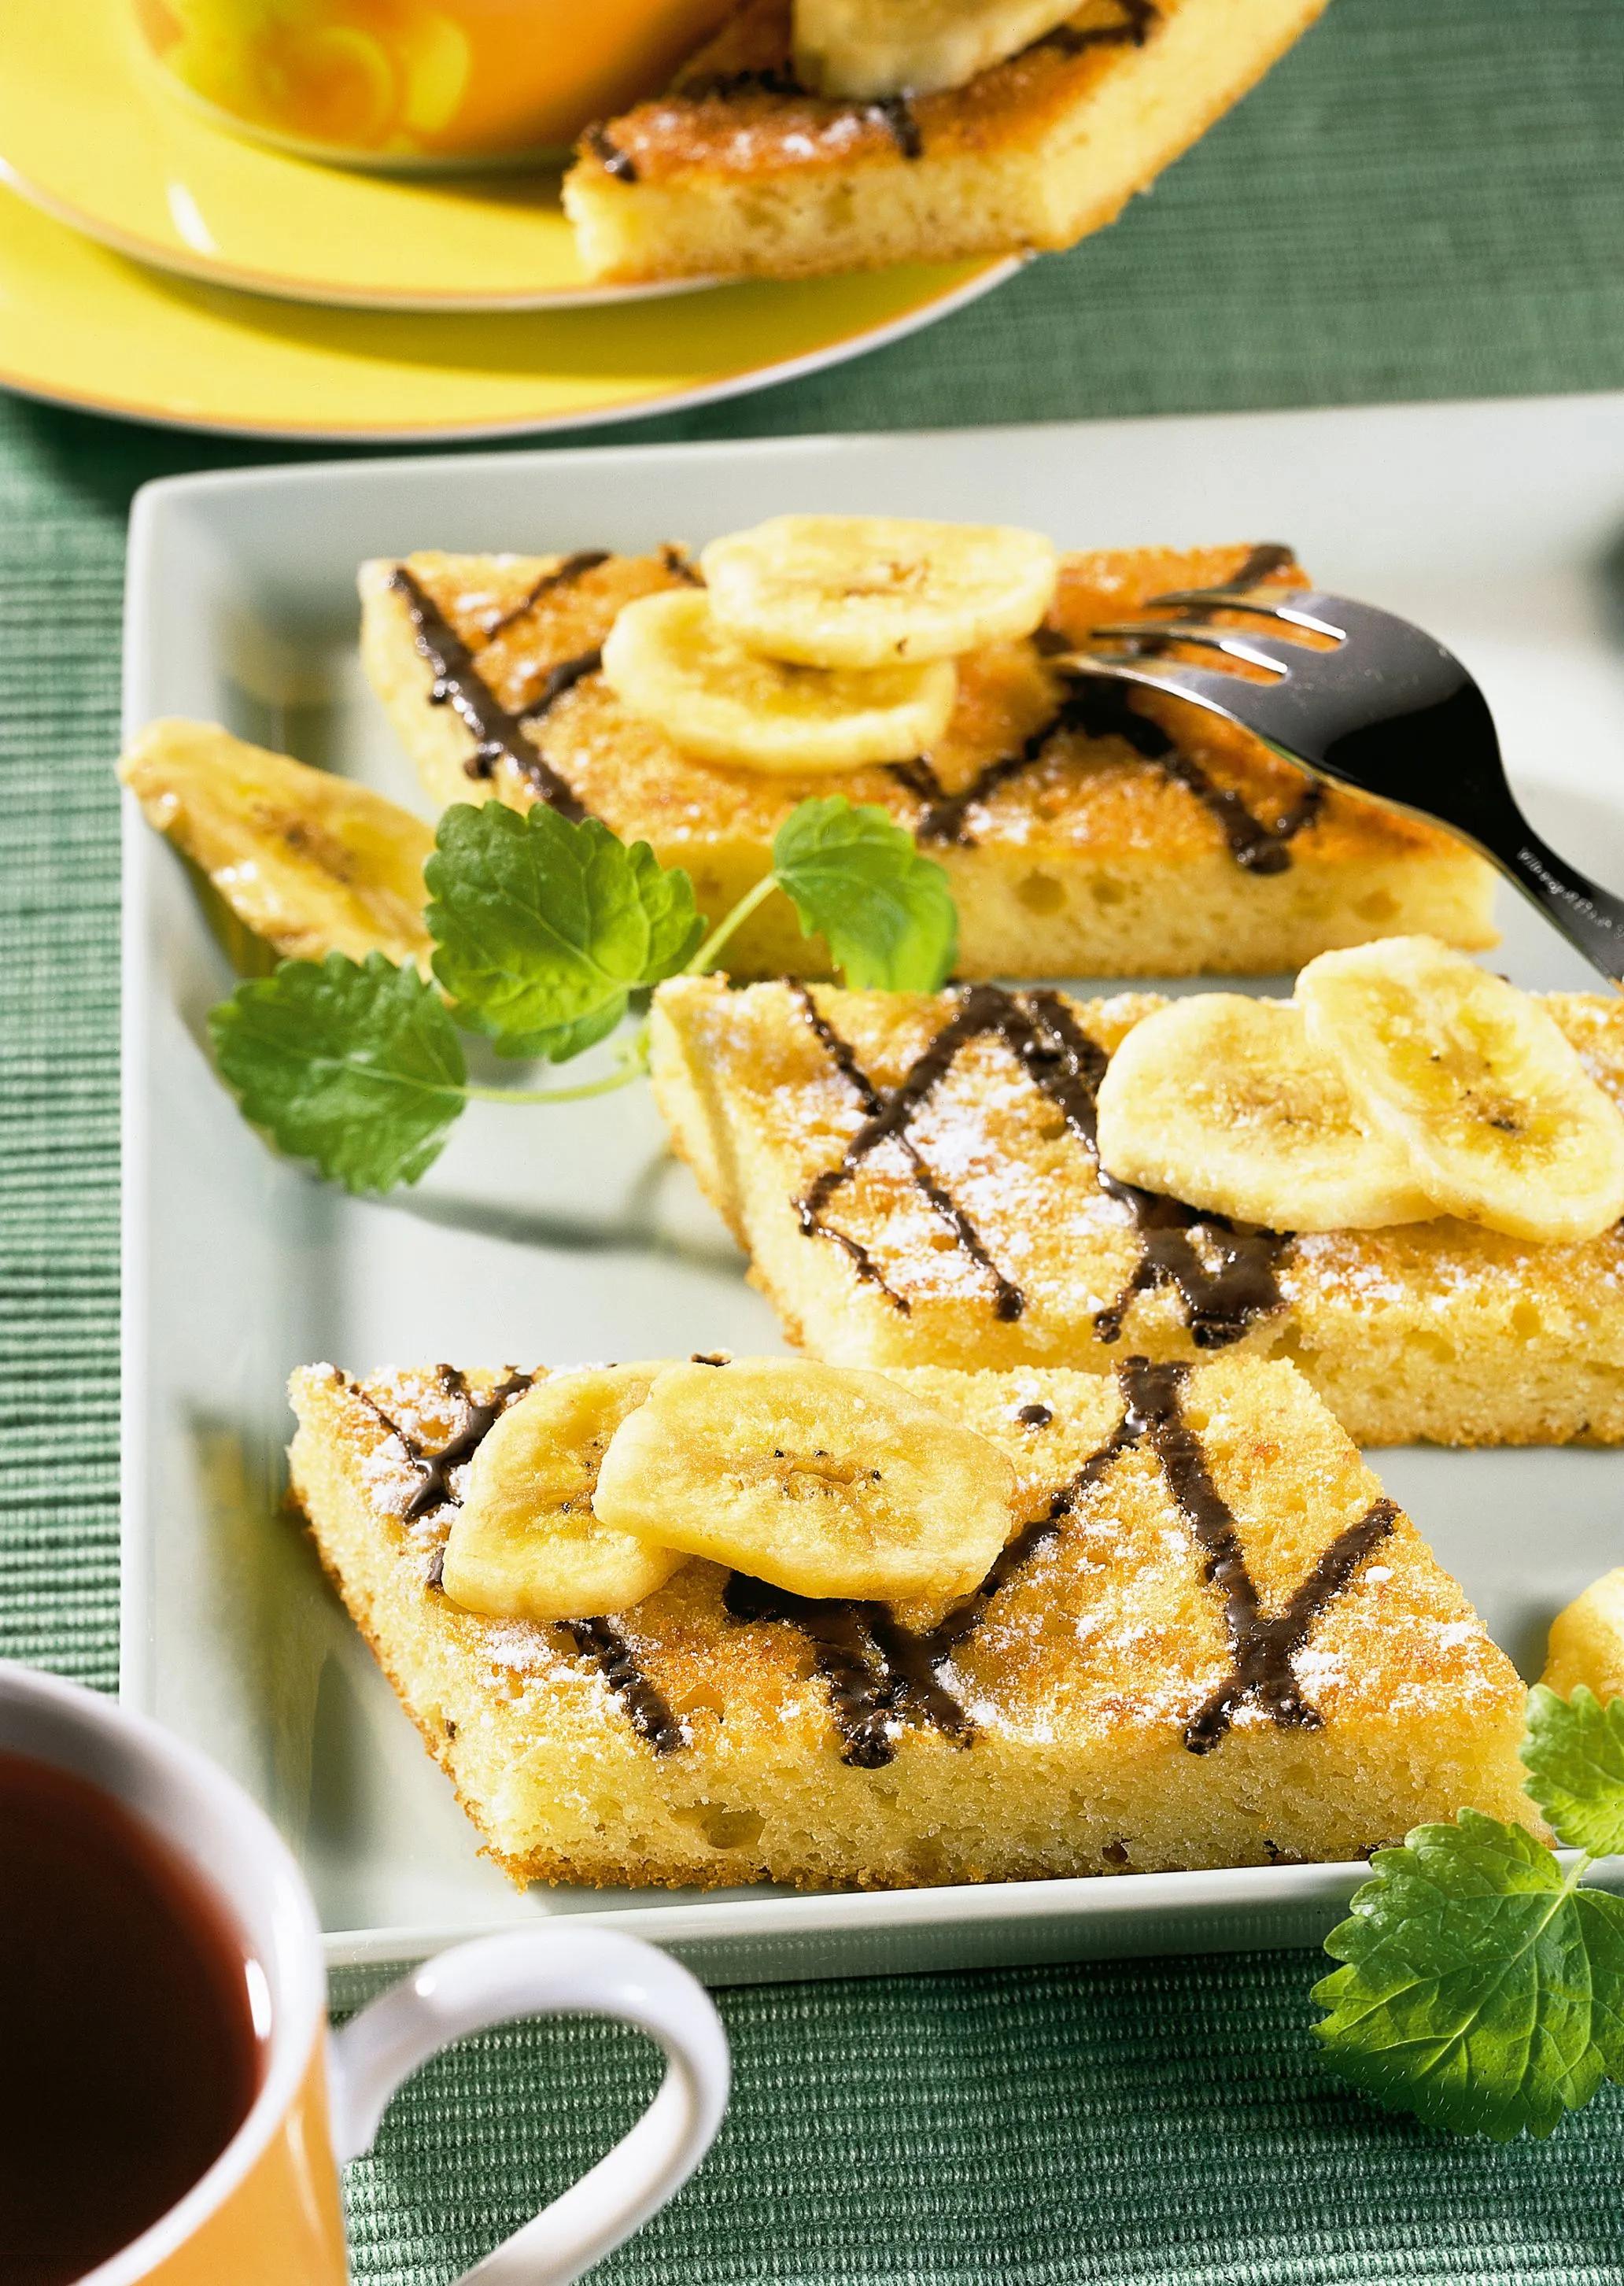 Schnelle Bananenschnitten | Bananen schnitten, Bananenschnitte, Rezepte